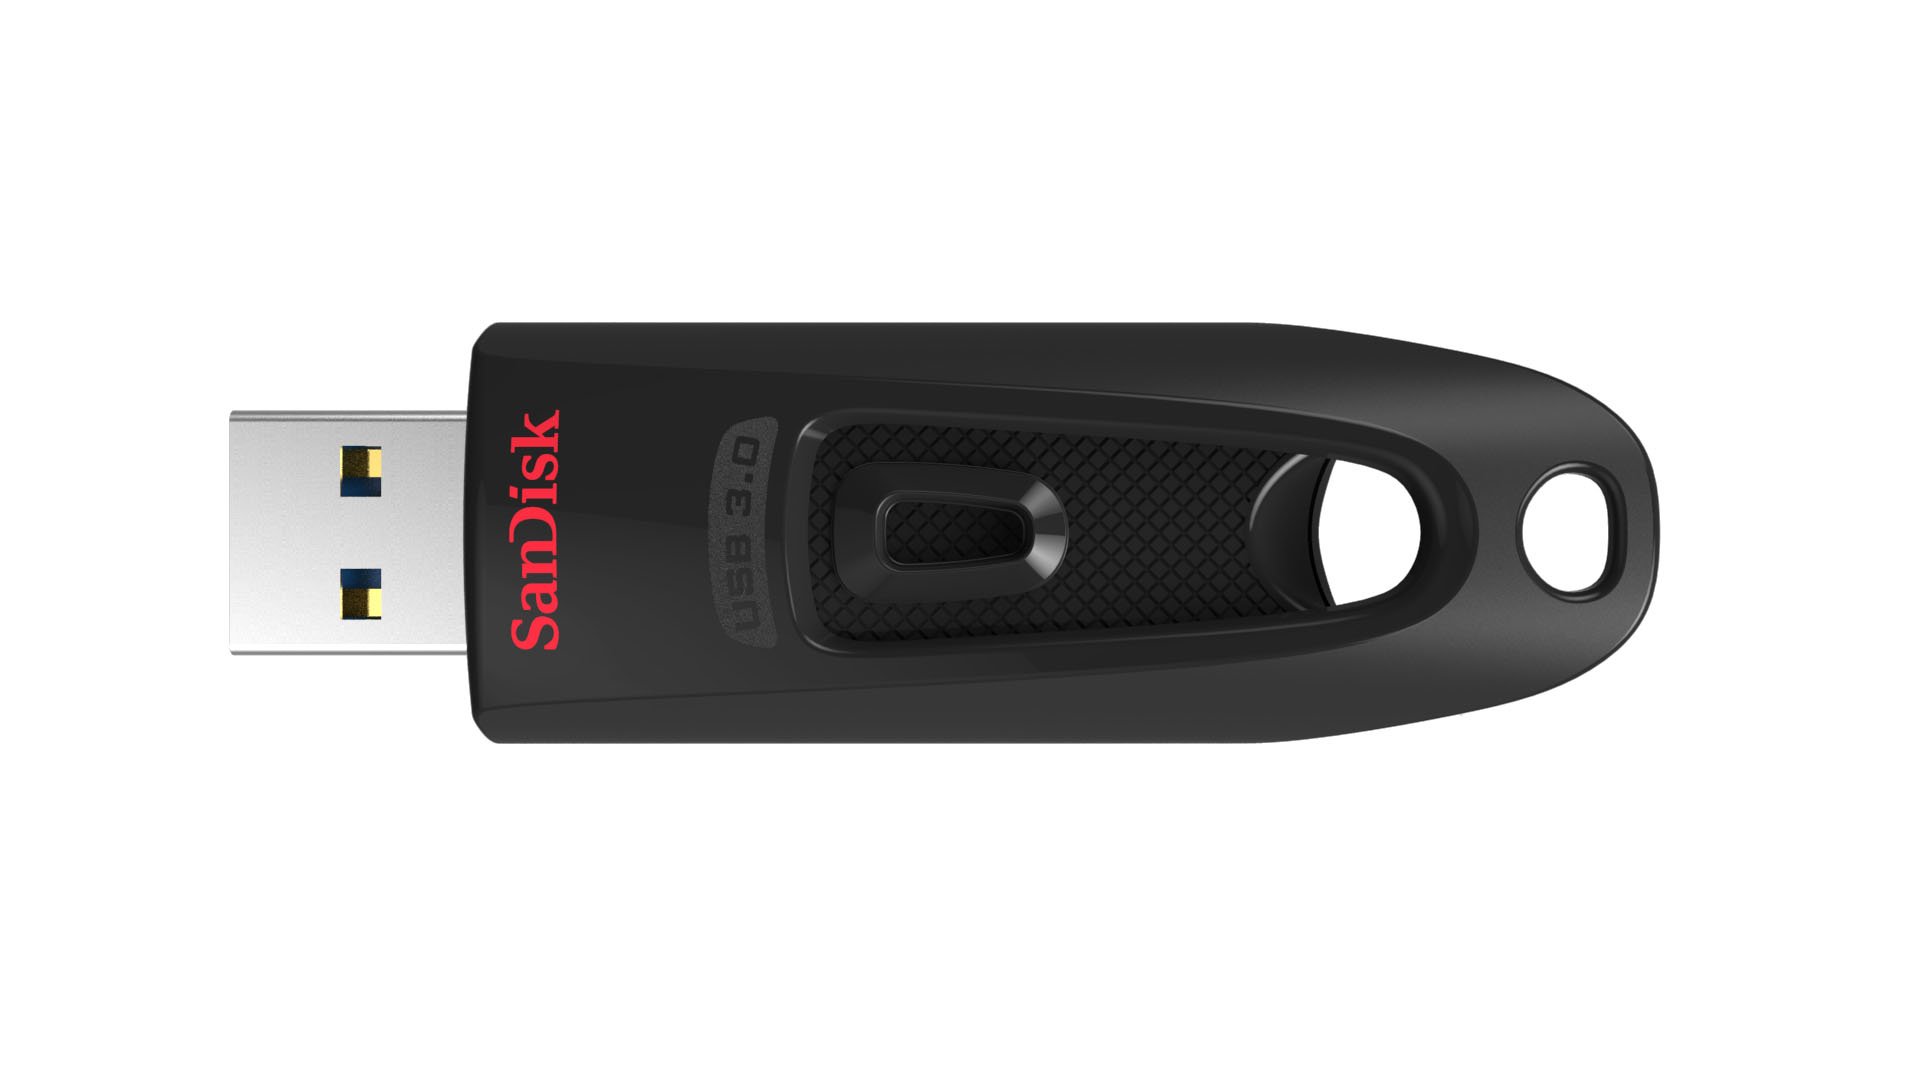 SanDisk 256GB Ultra USB 3.0 Flash Drive - SDCZ48-256G-GAM46, Black